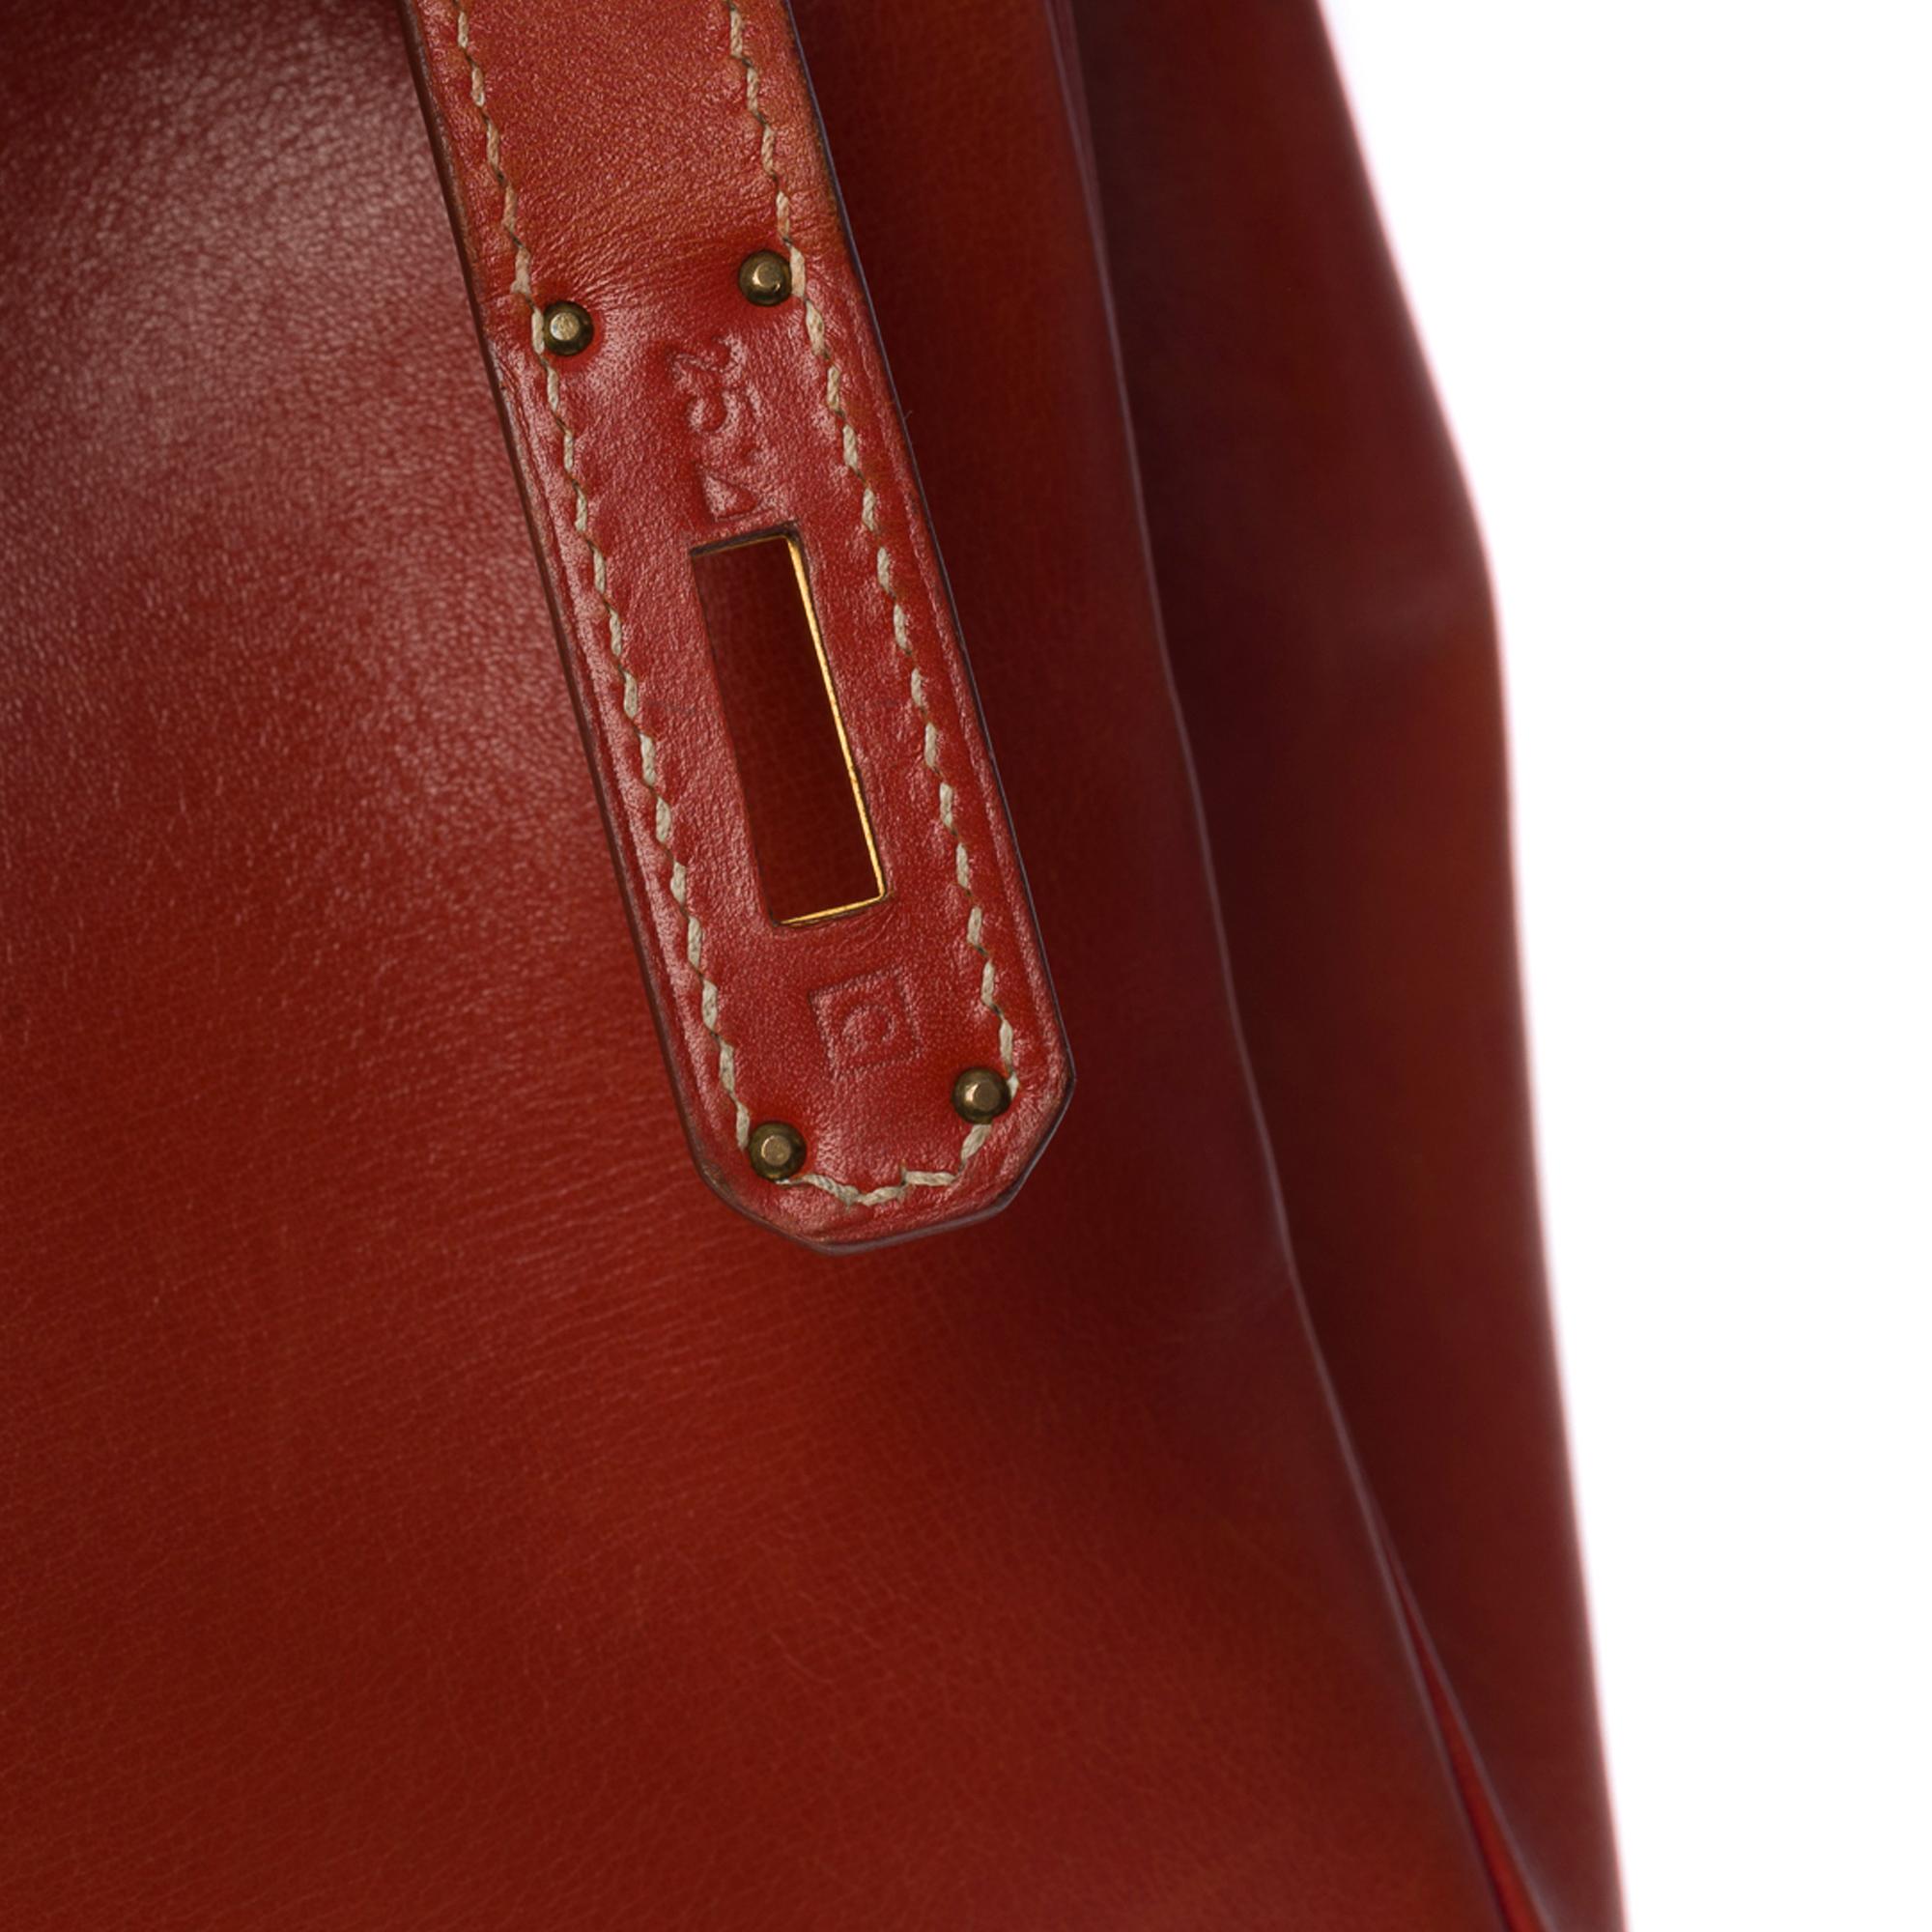 Amazing & Rare Hermès Birkin 35 handbag in Cognac box calfskin leather, GHW 2